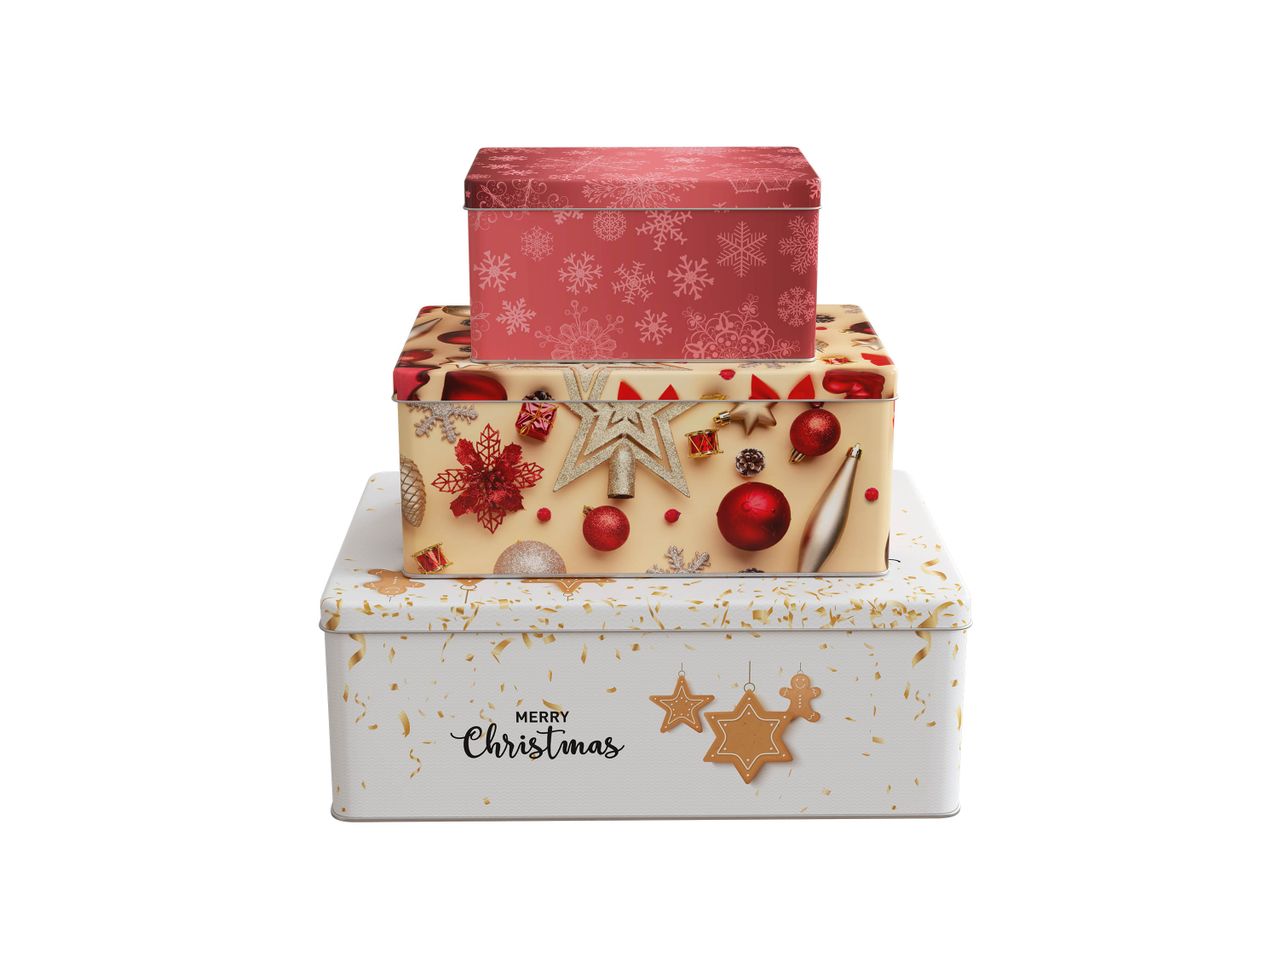 Boîtes à biscuits de Noël , prezzo 5.99 EUR 
Boîtes à biscuits de Noël 
- ...